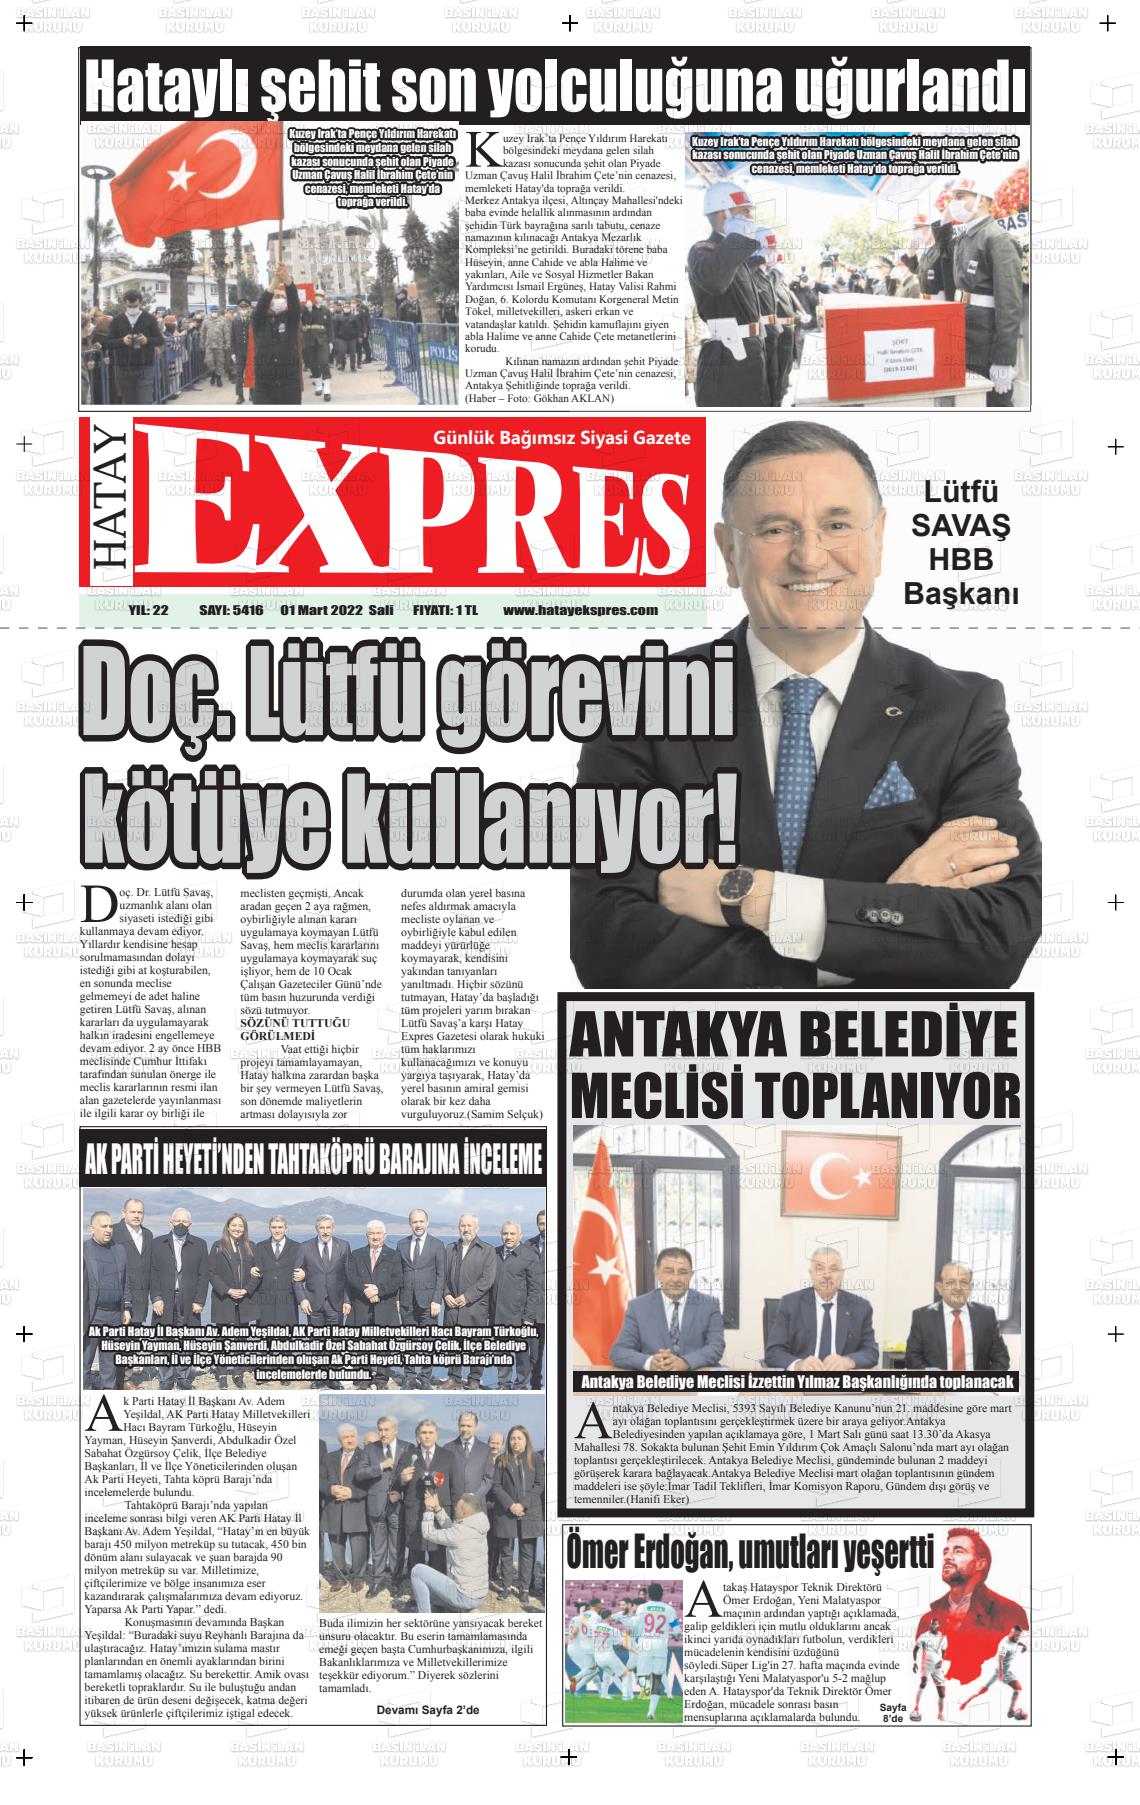 01 mart 2022 tarihli hatay ekspres gazete manşetleri